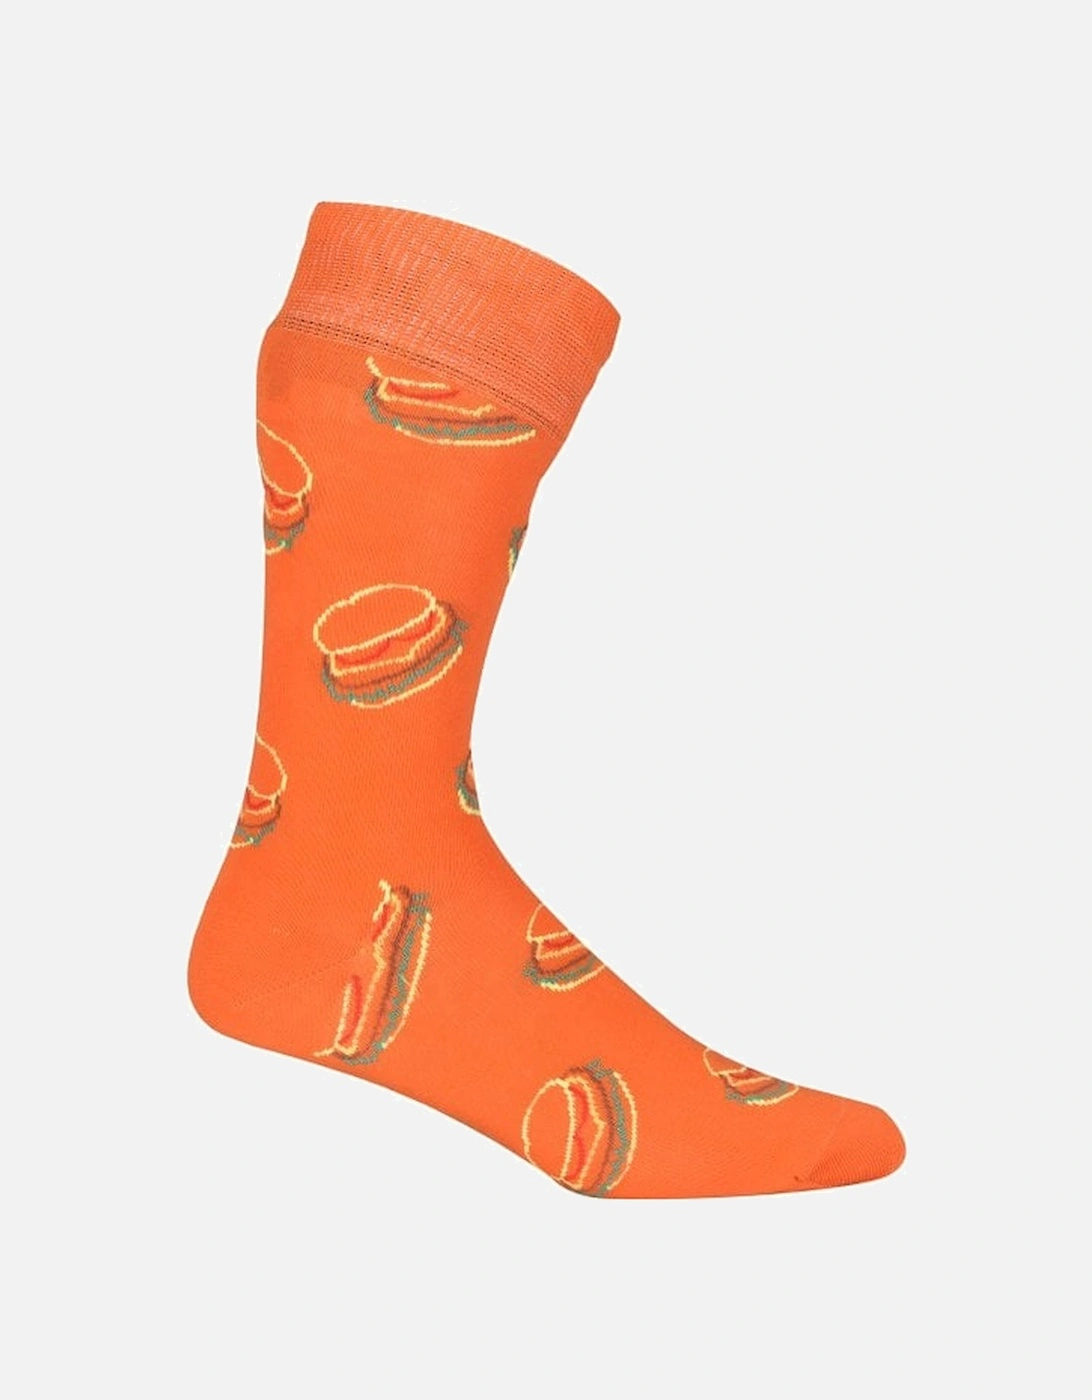 Lunch Time Socks, Orange